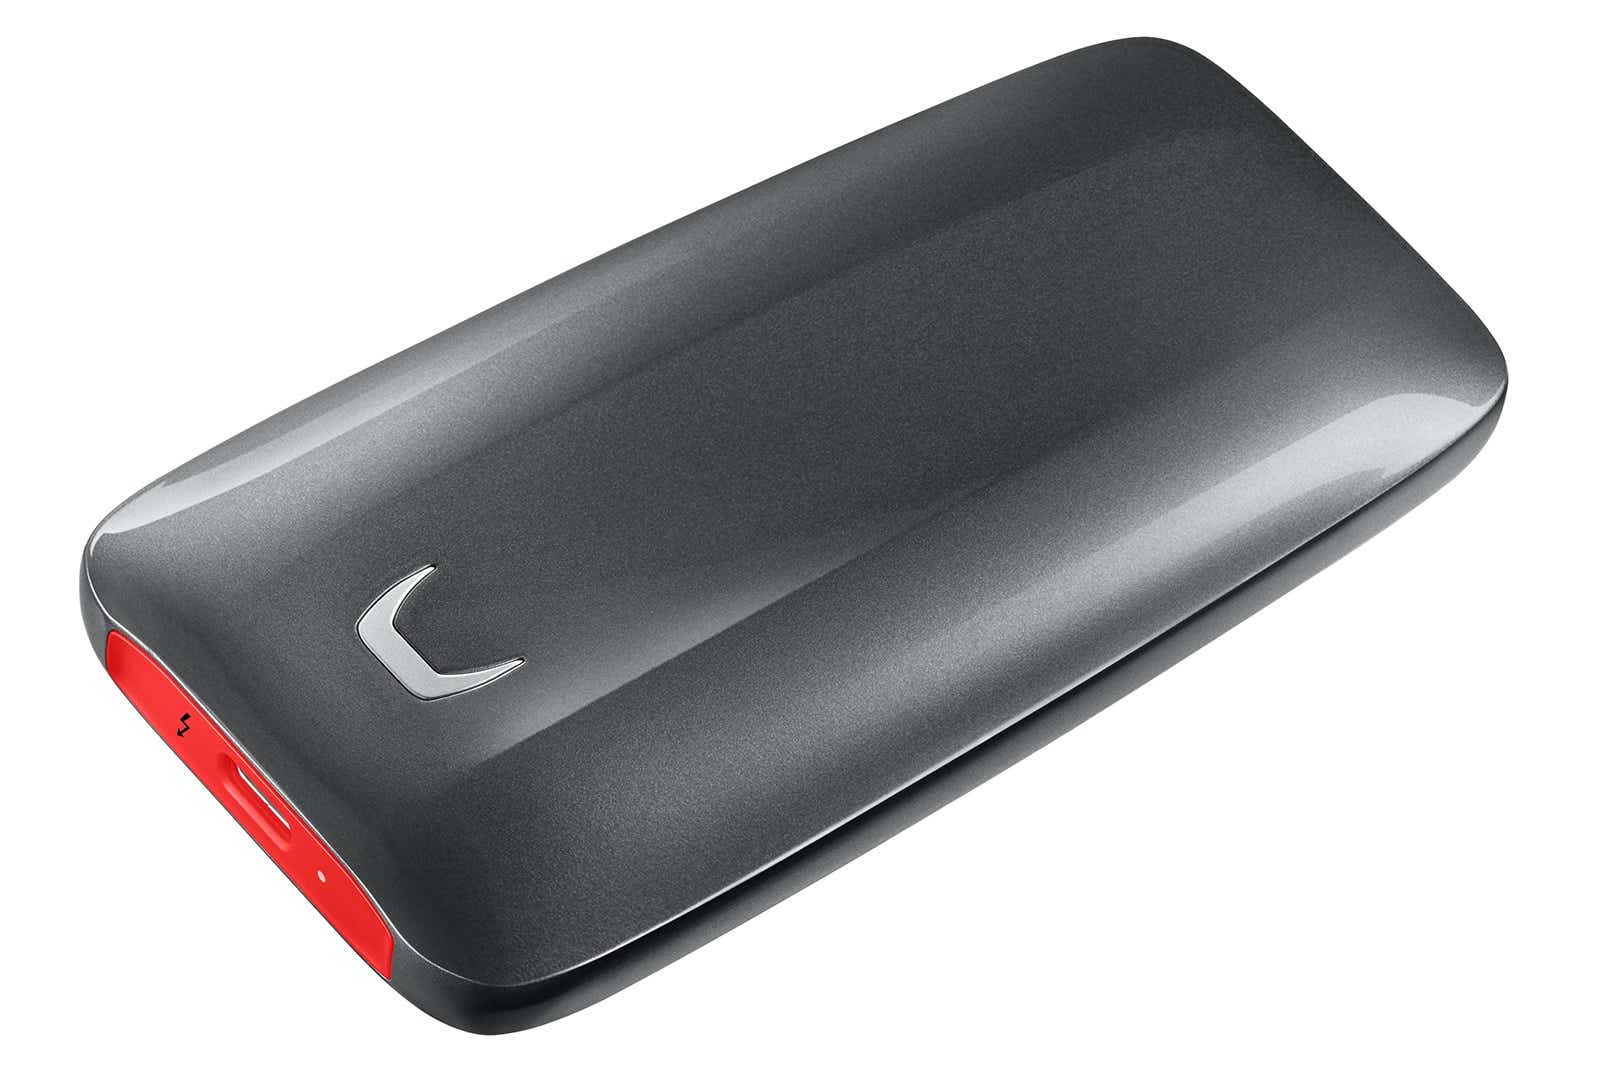 Samsung Portable SSD X5 - Best Thunderbolt 3 drive